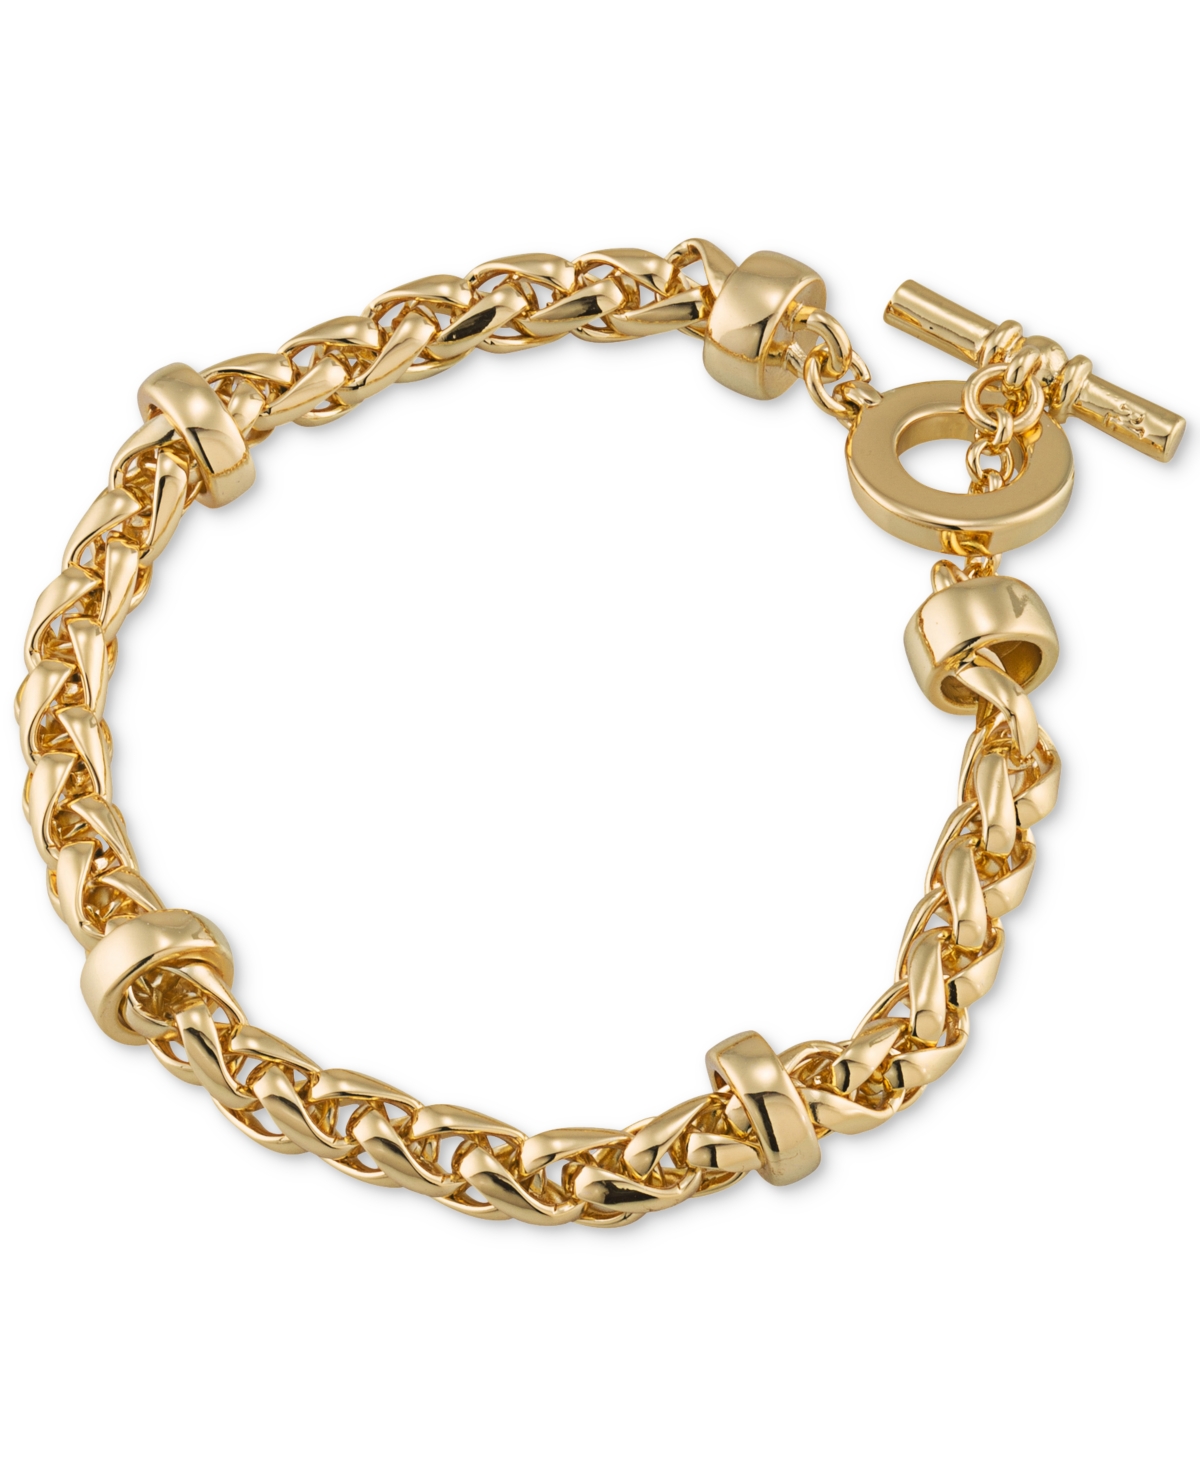 Gold-Tone Heavy Chain Toggle Bracelet - Silver